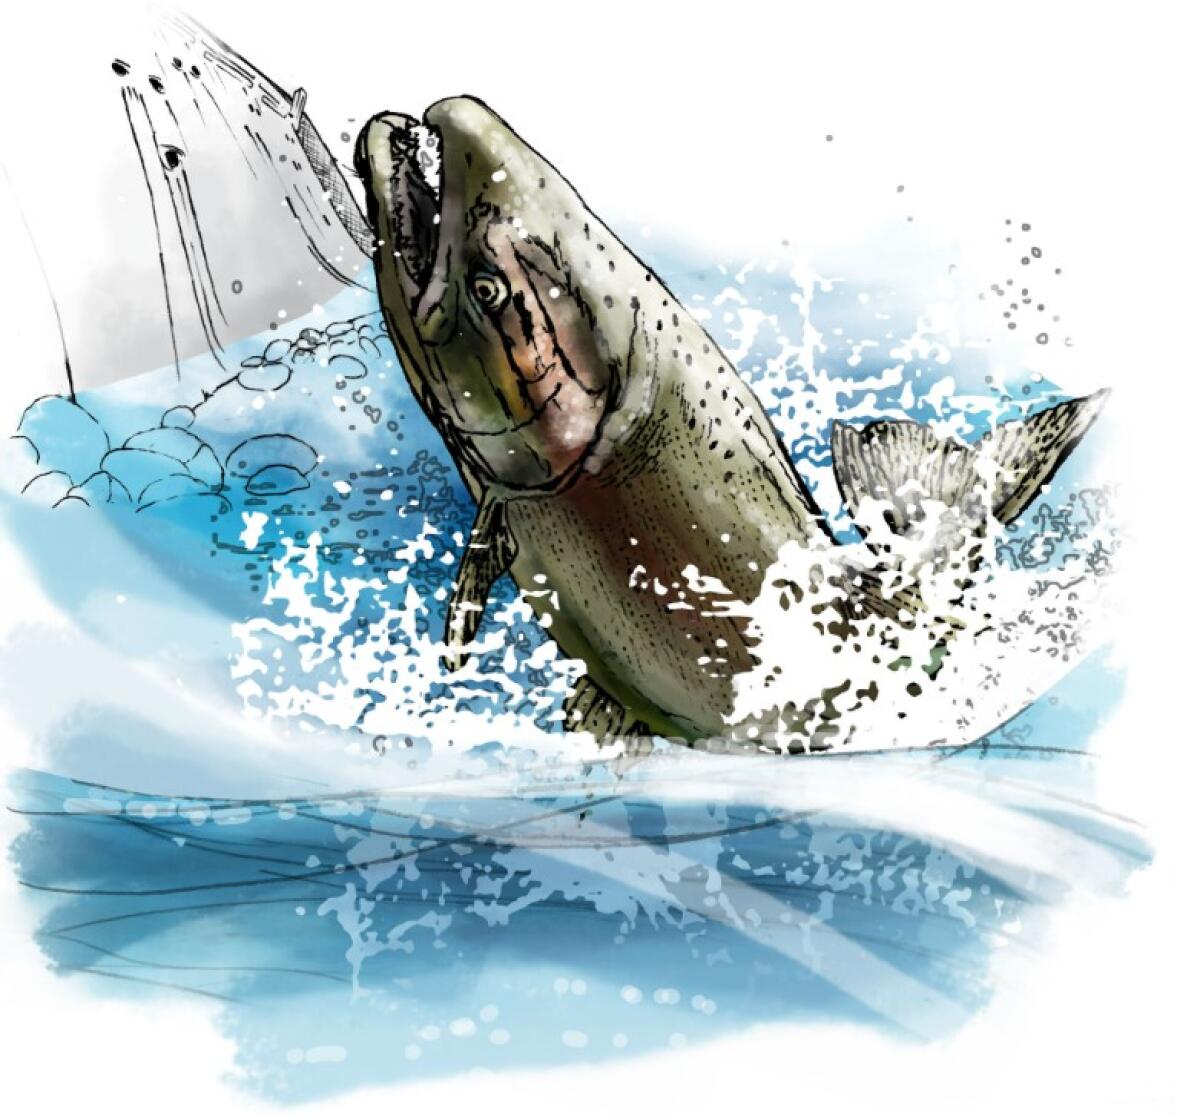 Illustration of a salmon splashing in water.